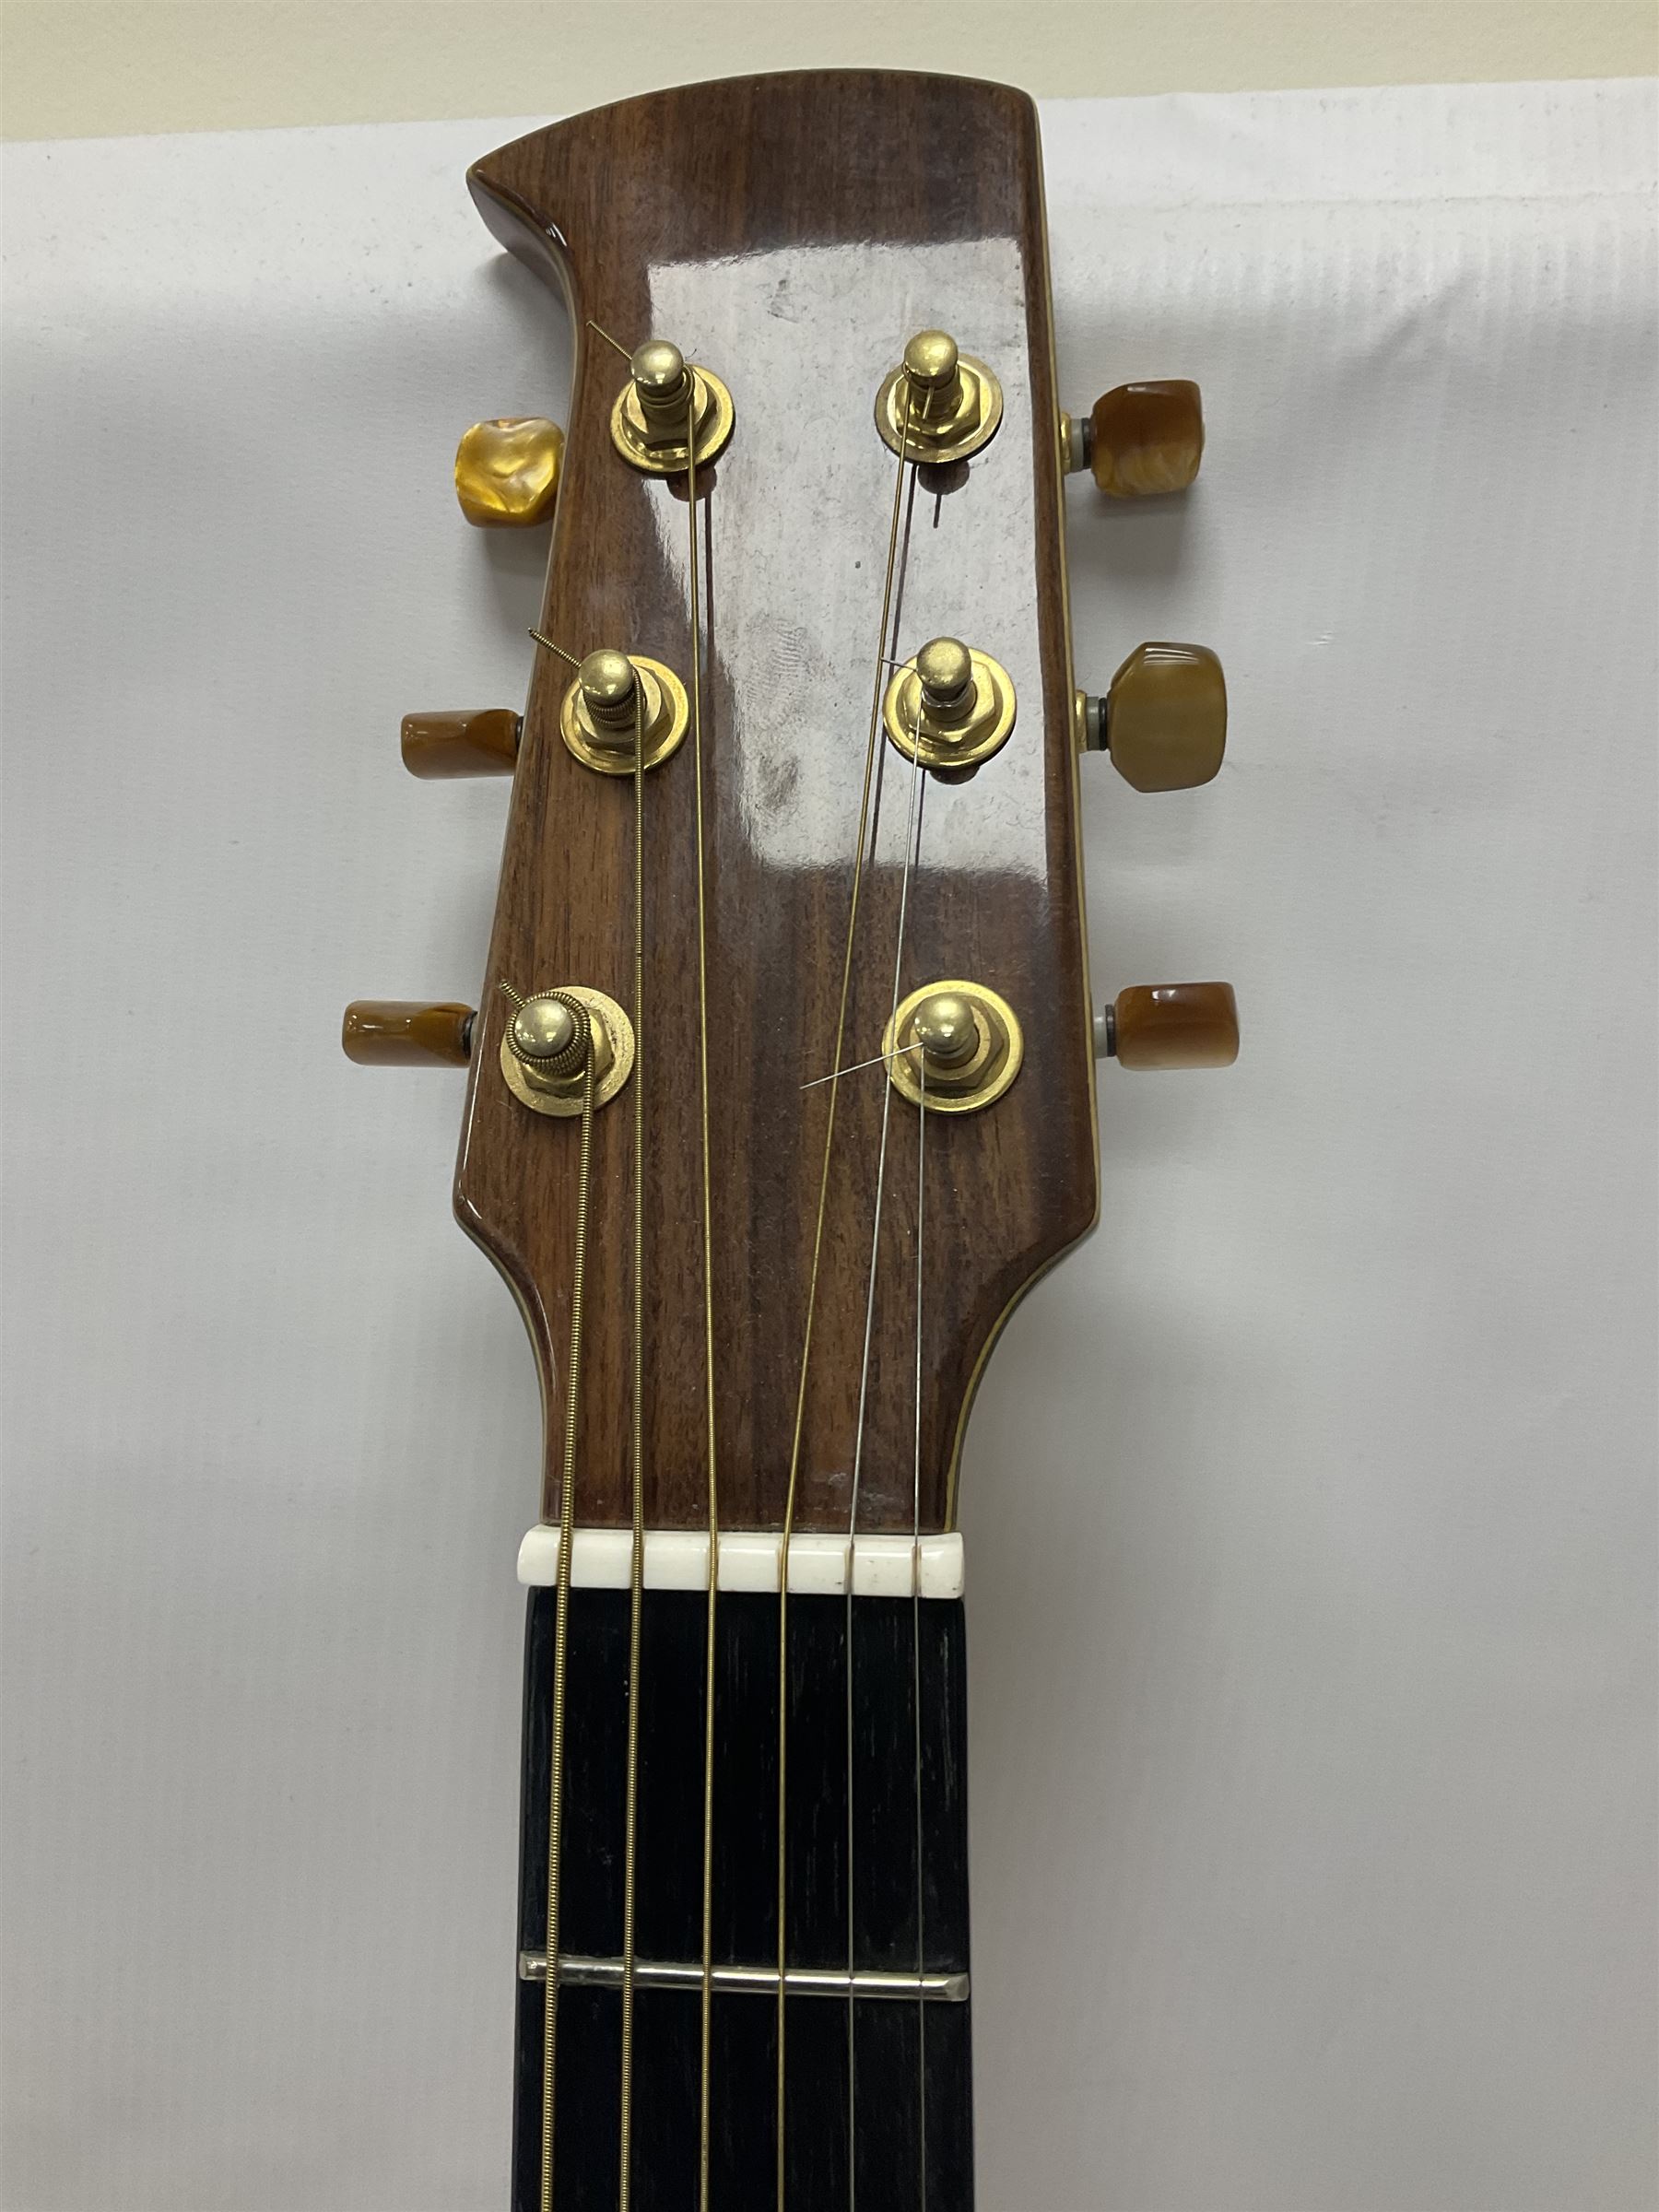 Brazilian Giannini Craviola six string acoustic guitar - Image 13 of 21